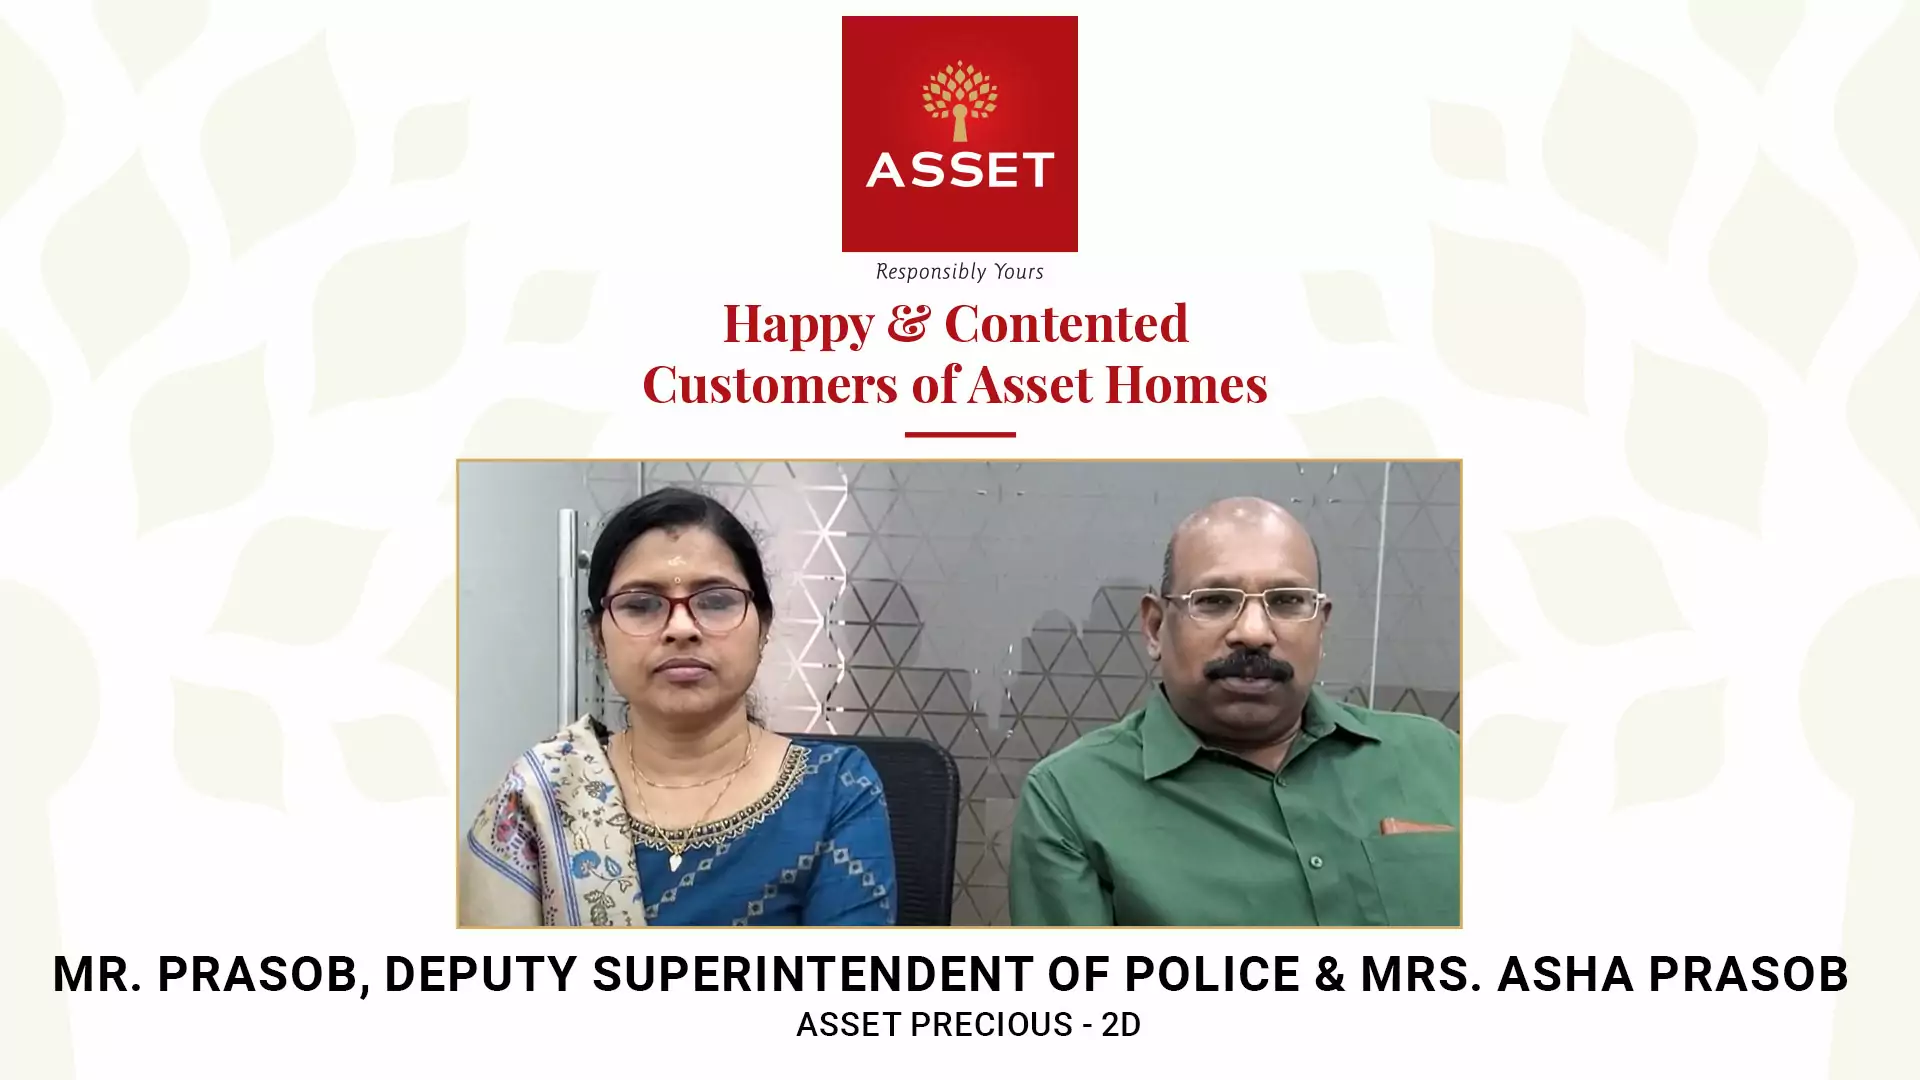 Mr. Prasob, Deputy Superintendent of Police & Mrs. Asha Prasob, Asset Precious – 2D